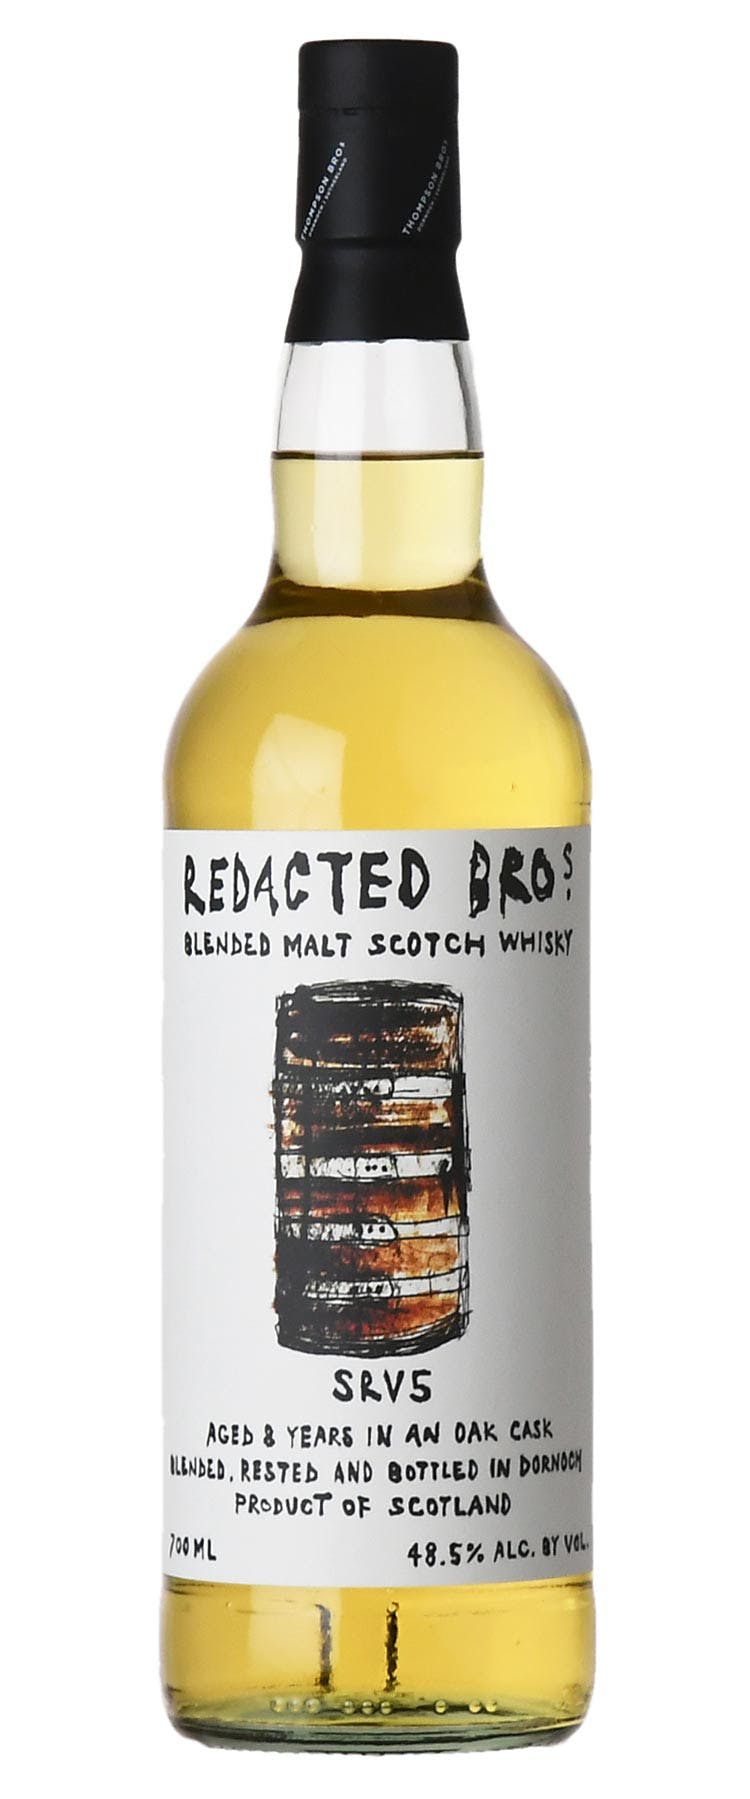 Redacted bros blended malt scotch whisky